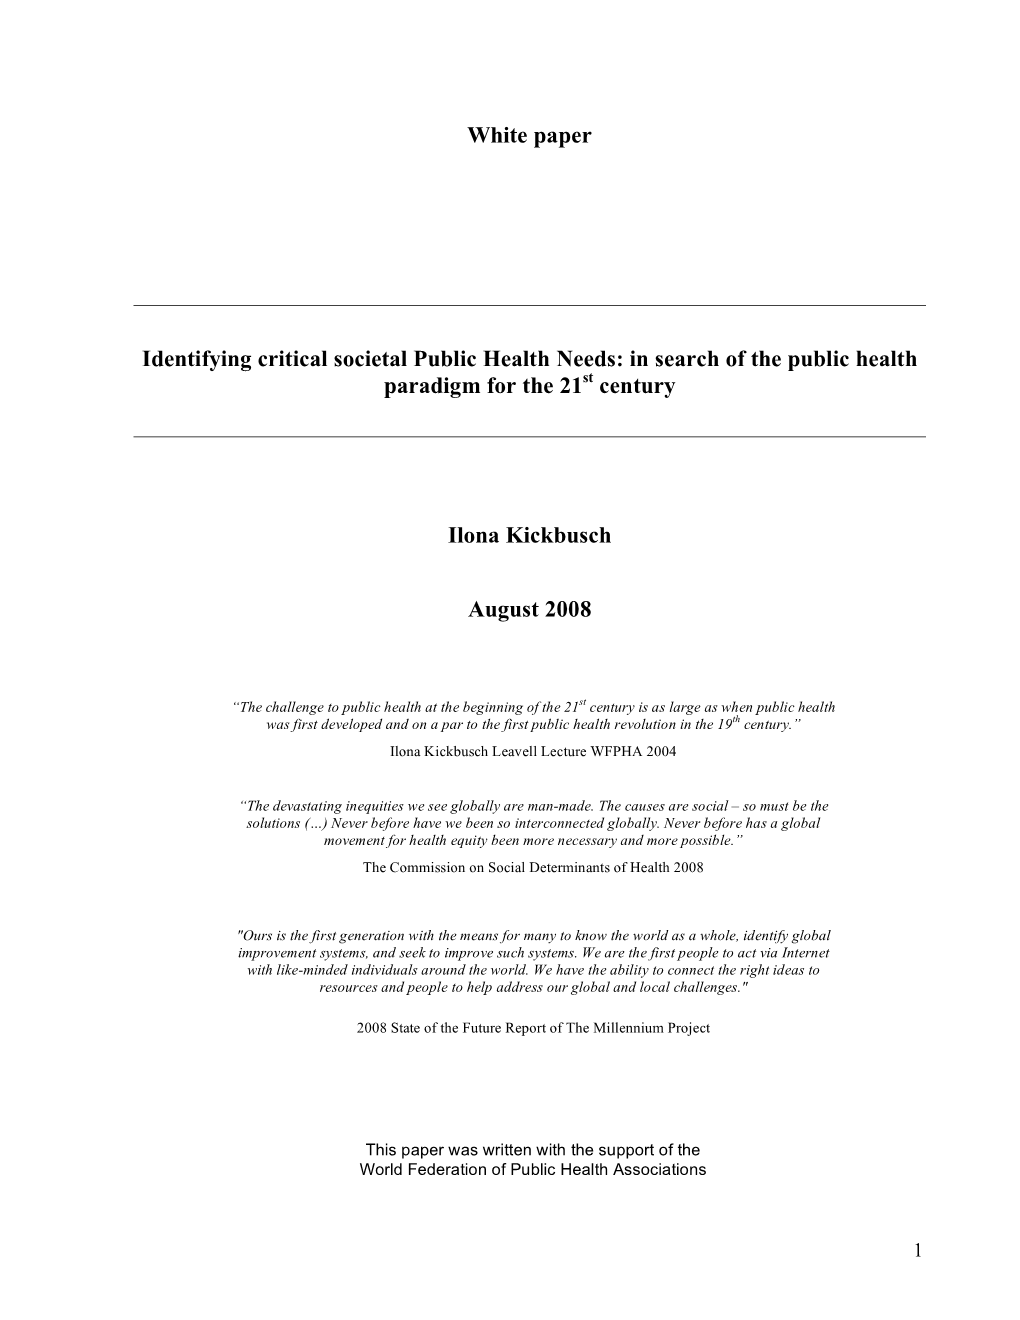 White Paper Identifying Critical Societal Public Health